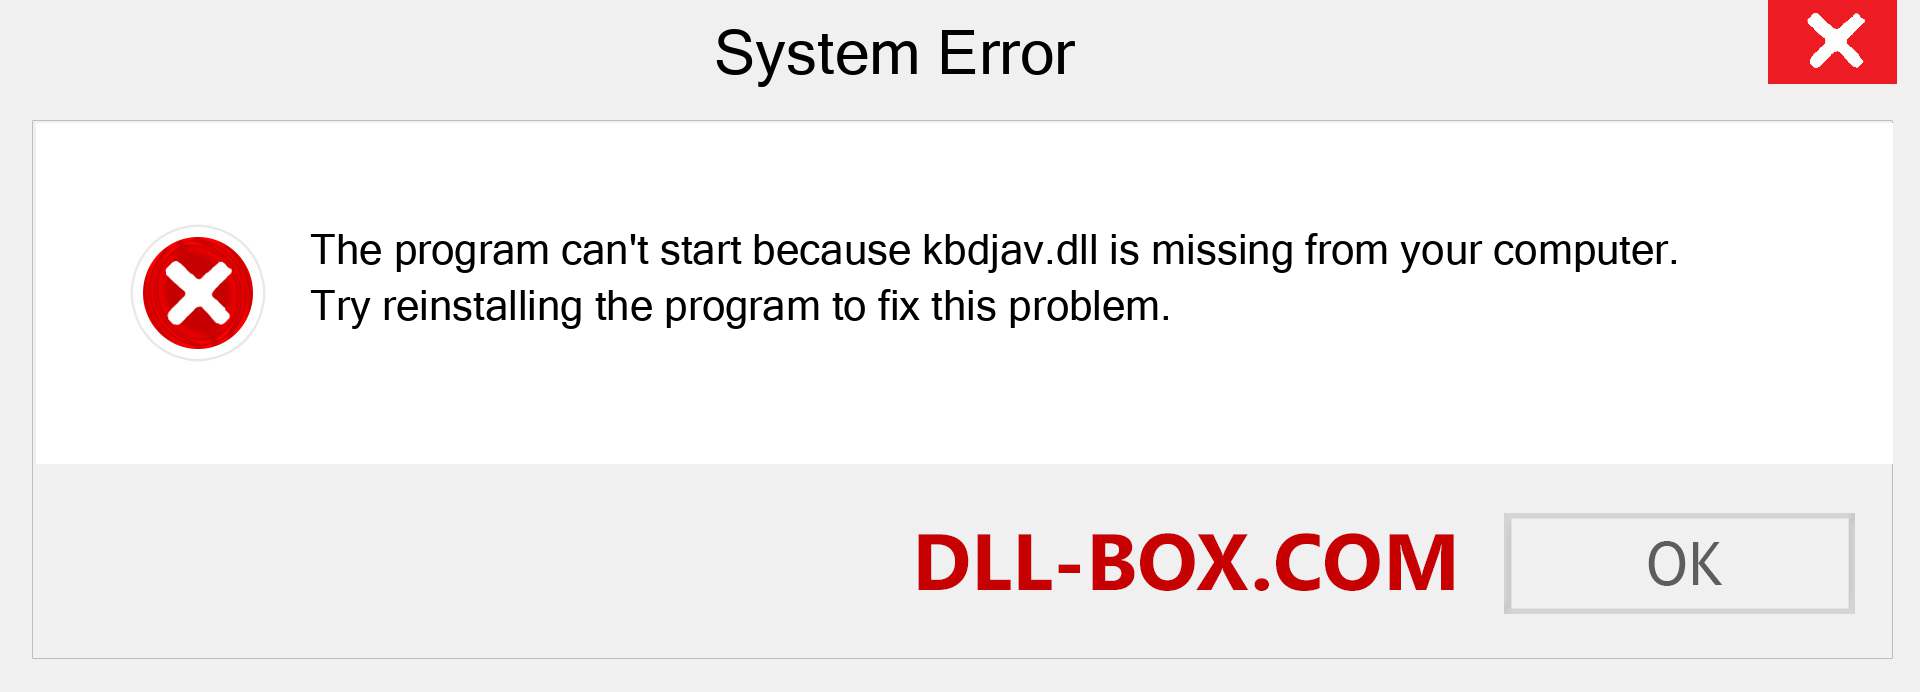  kbdjav.dll file is missing?. Download for Windows 7, 8, 10 - Fix  kbdjav dll Missing Error on Windows, photos, images